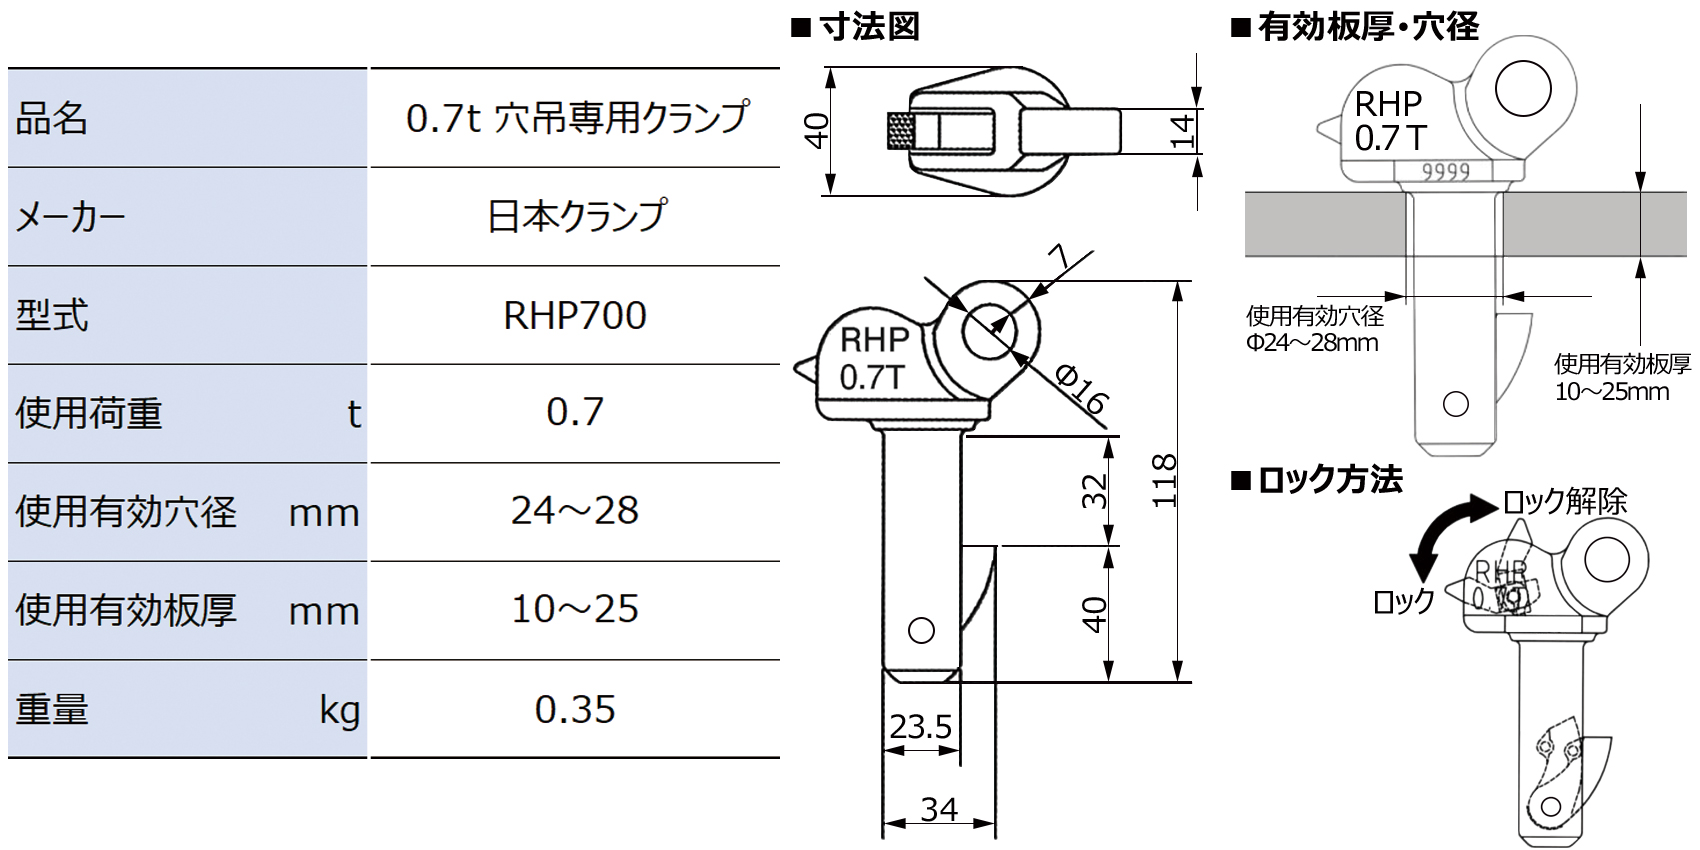 0.7t 穴吊専用クランプ RHP型 レンタル新製品情報